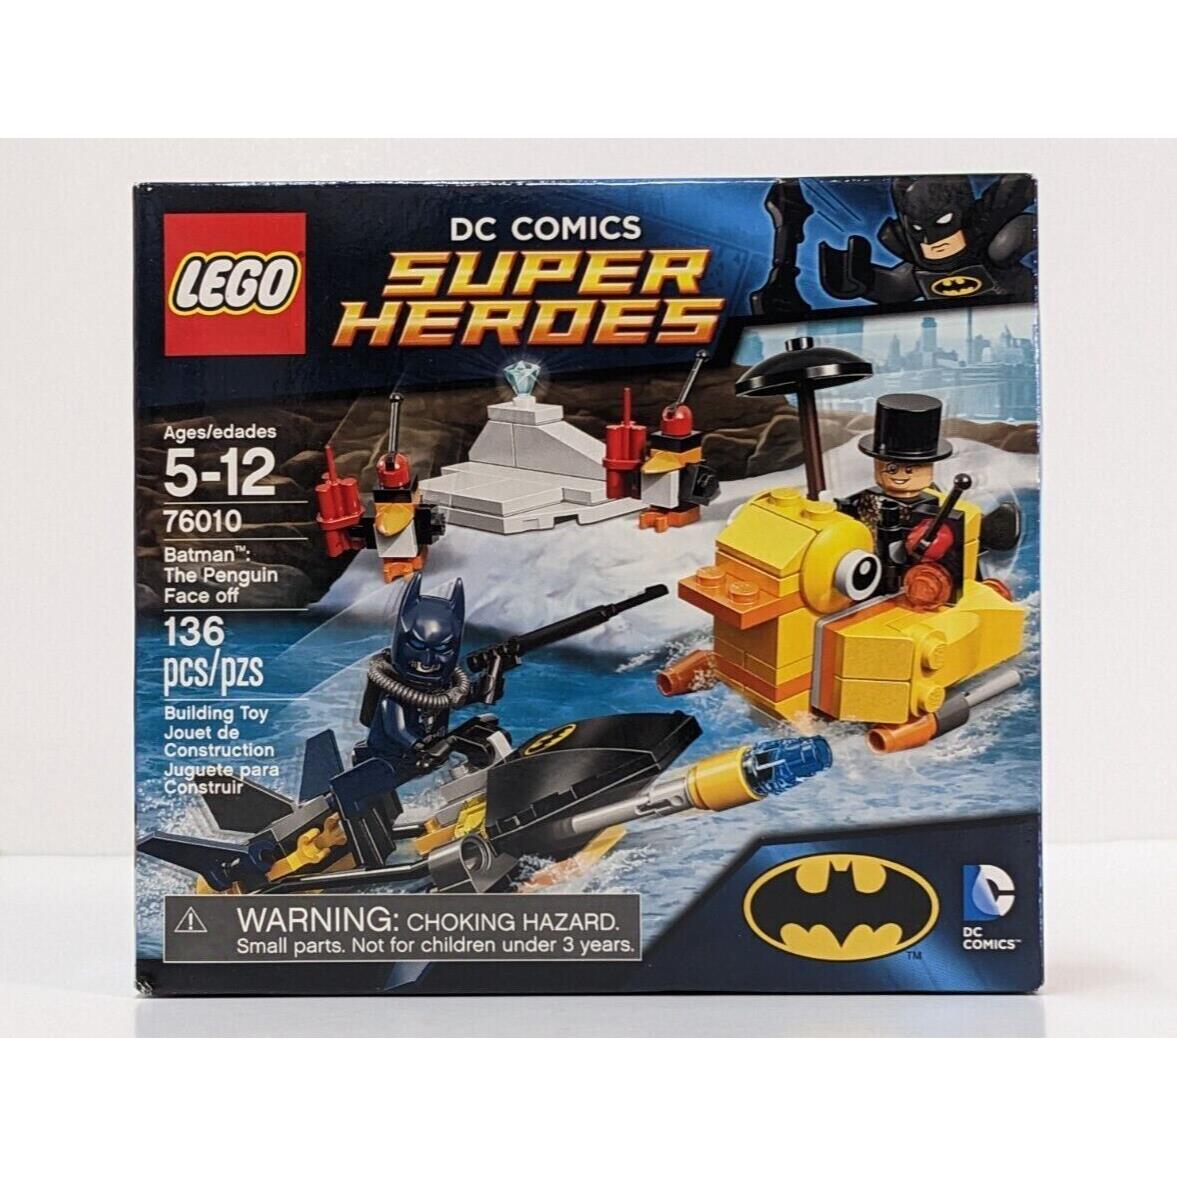 Lego DC Universe Super Heroes Batman The Penguin Face Off 76010 Retired Set